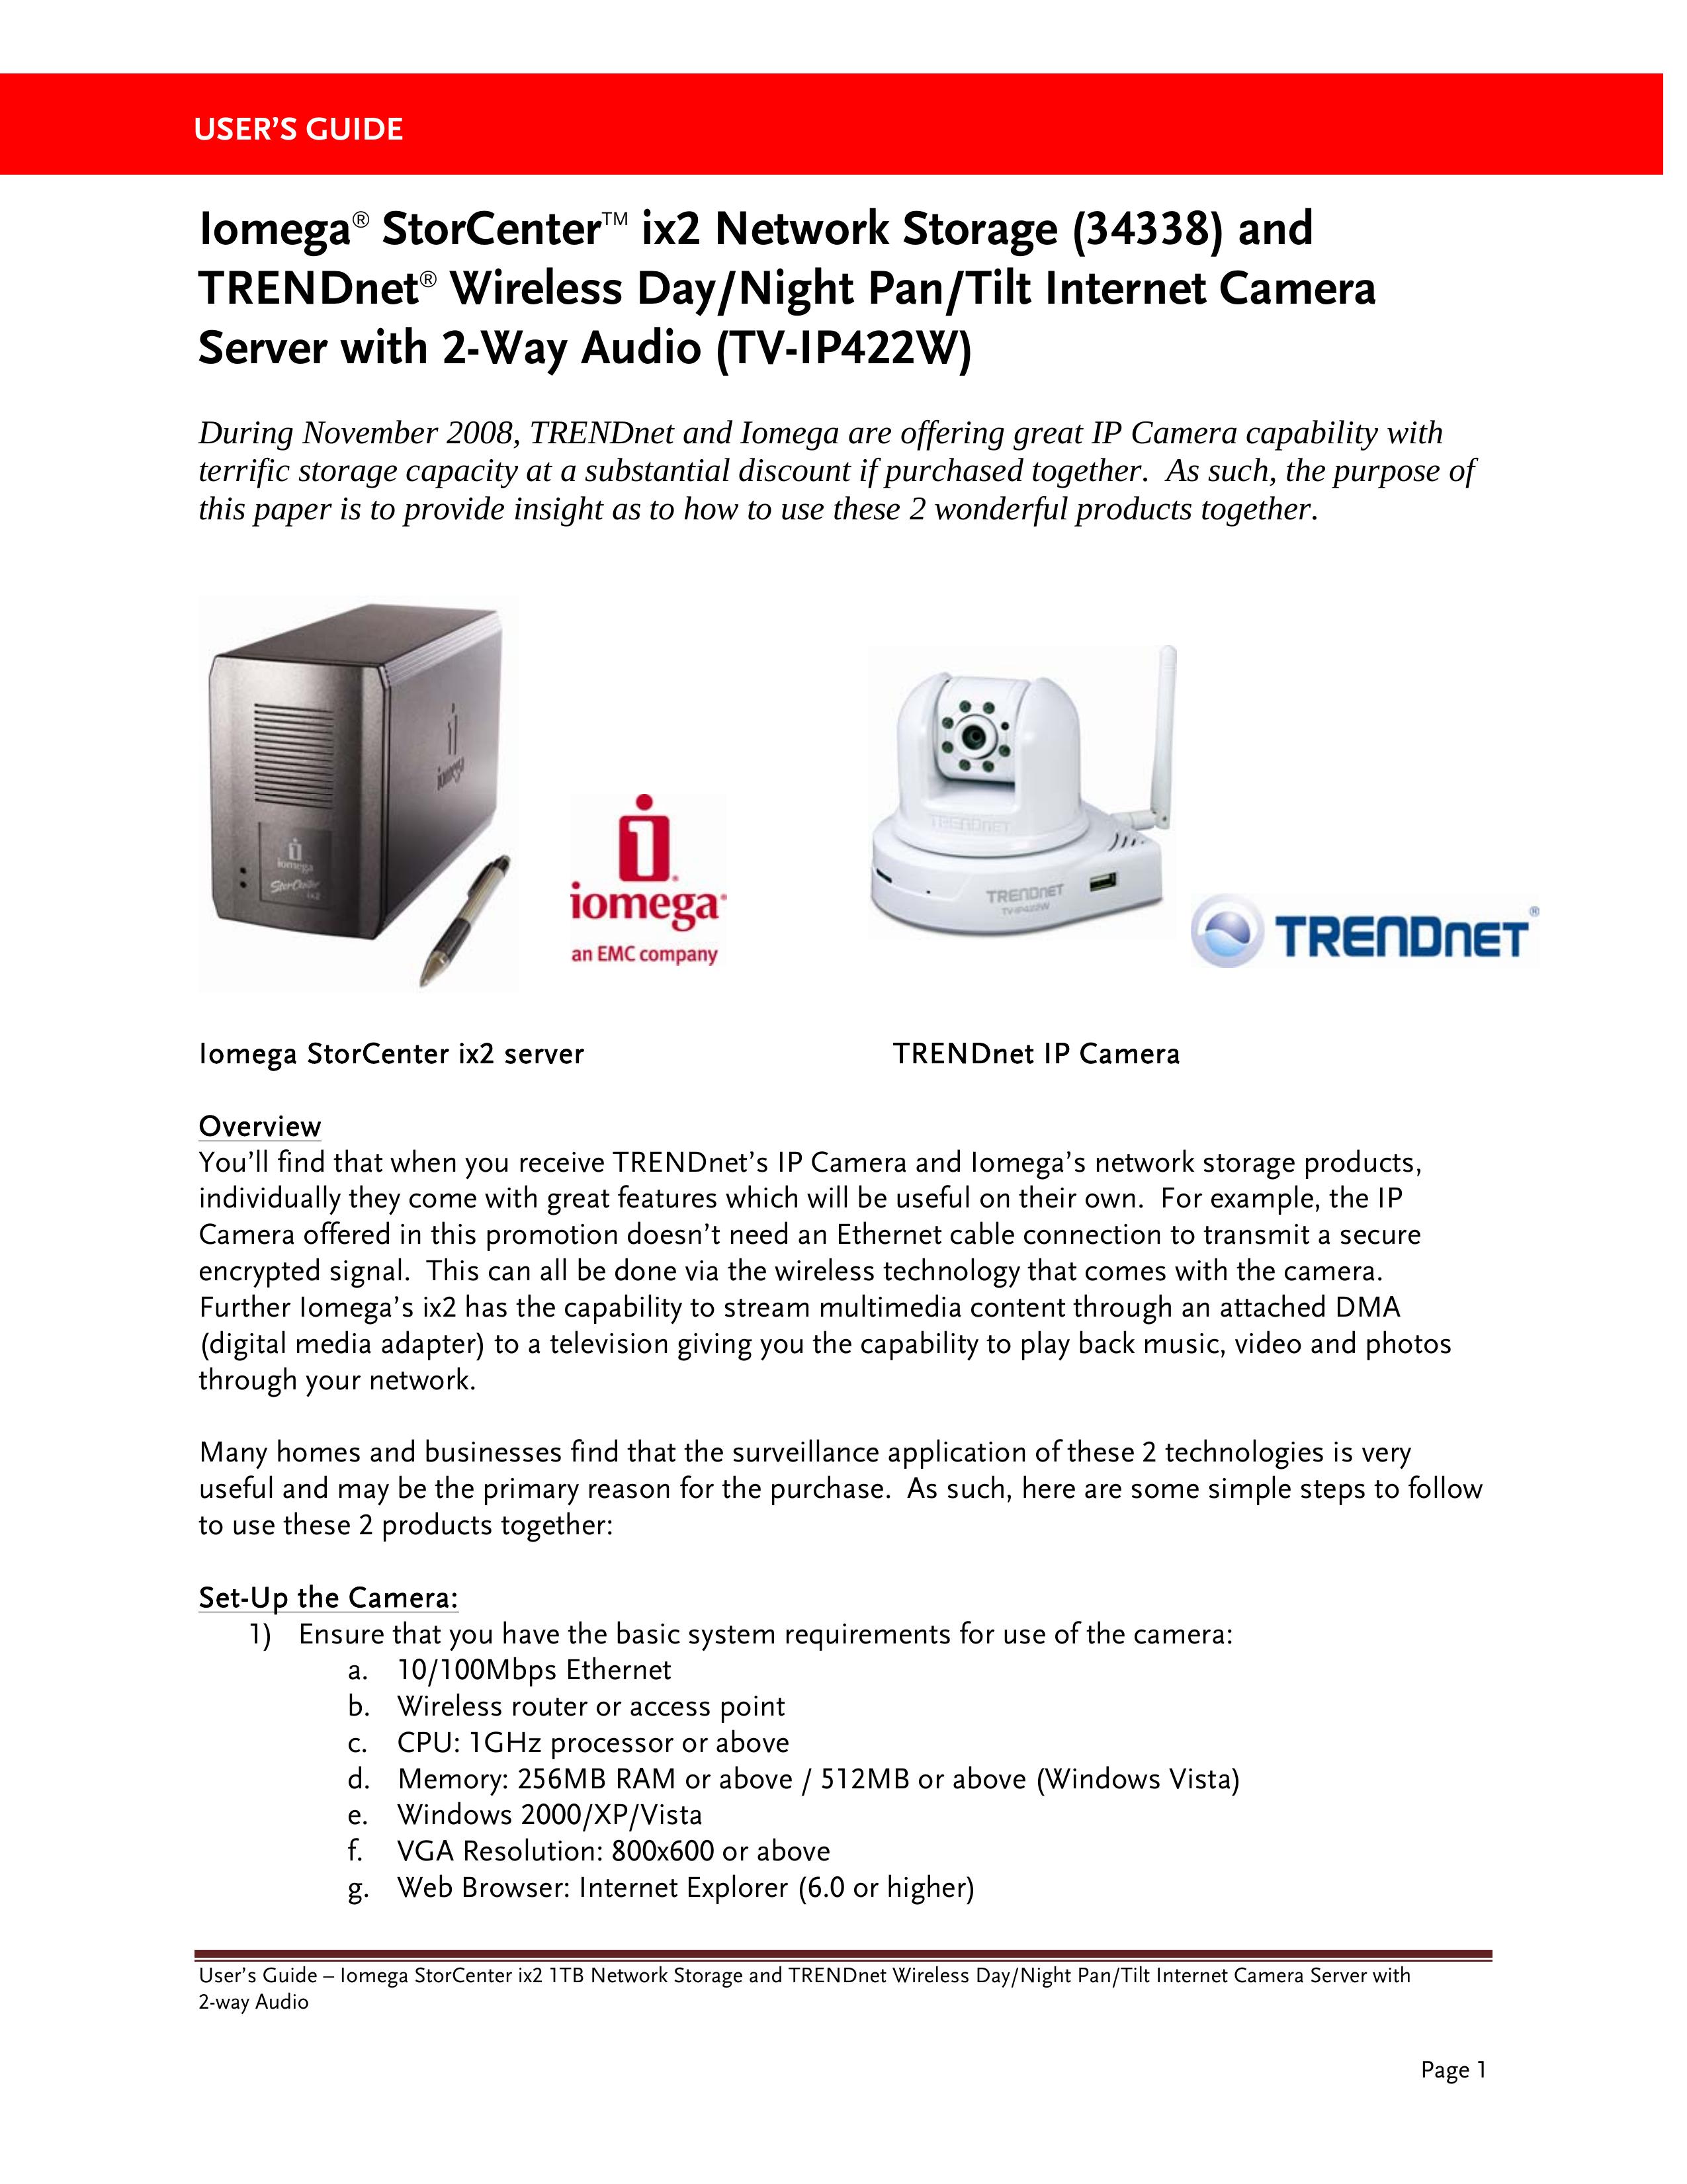 Iomega TV-IP422W Security Camera User Manual